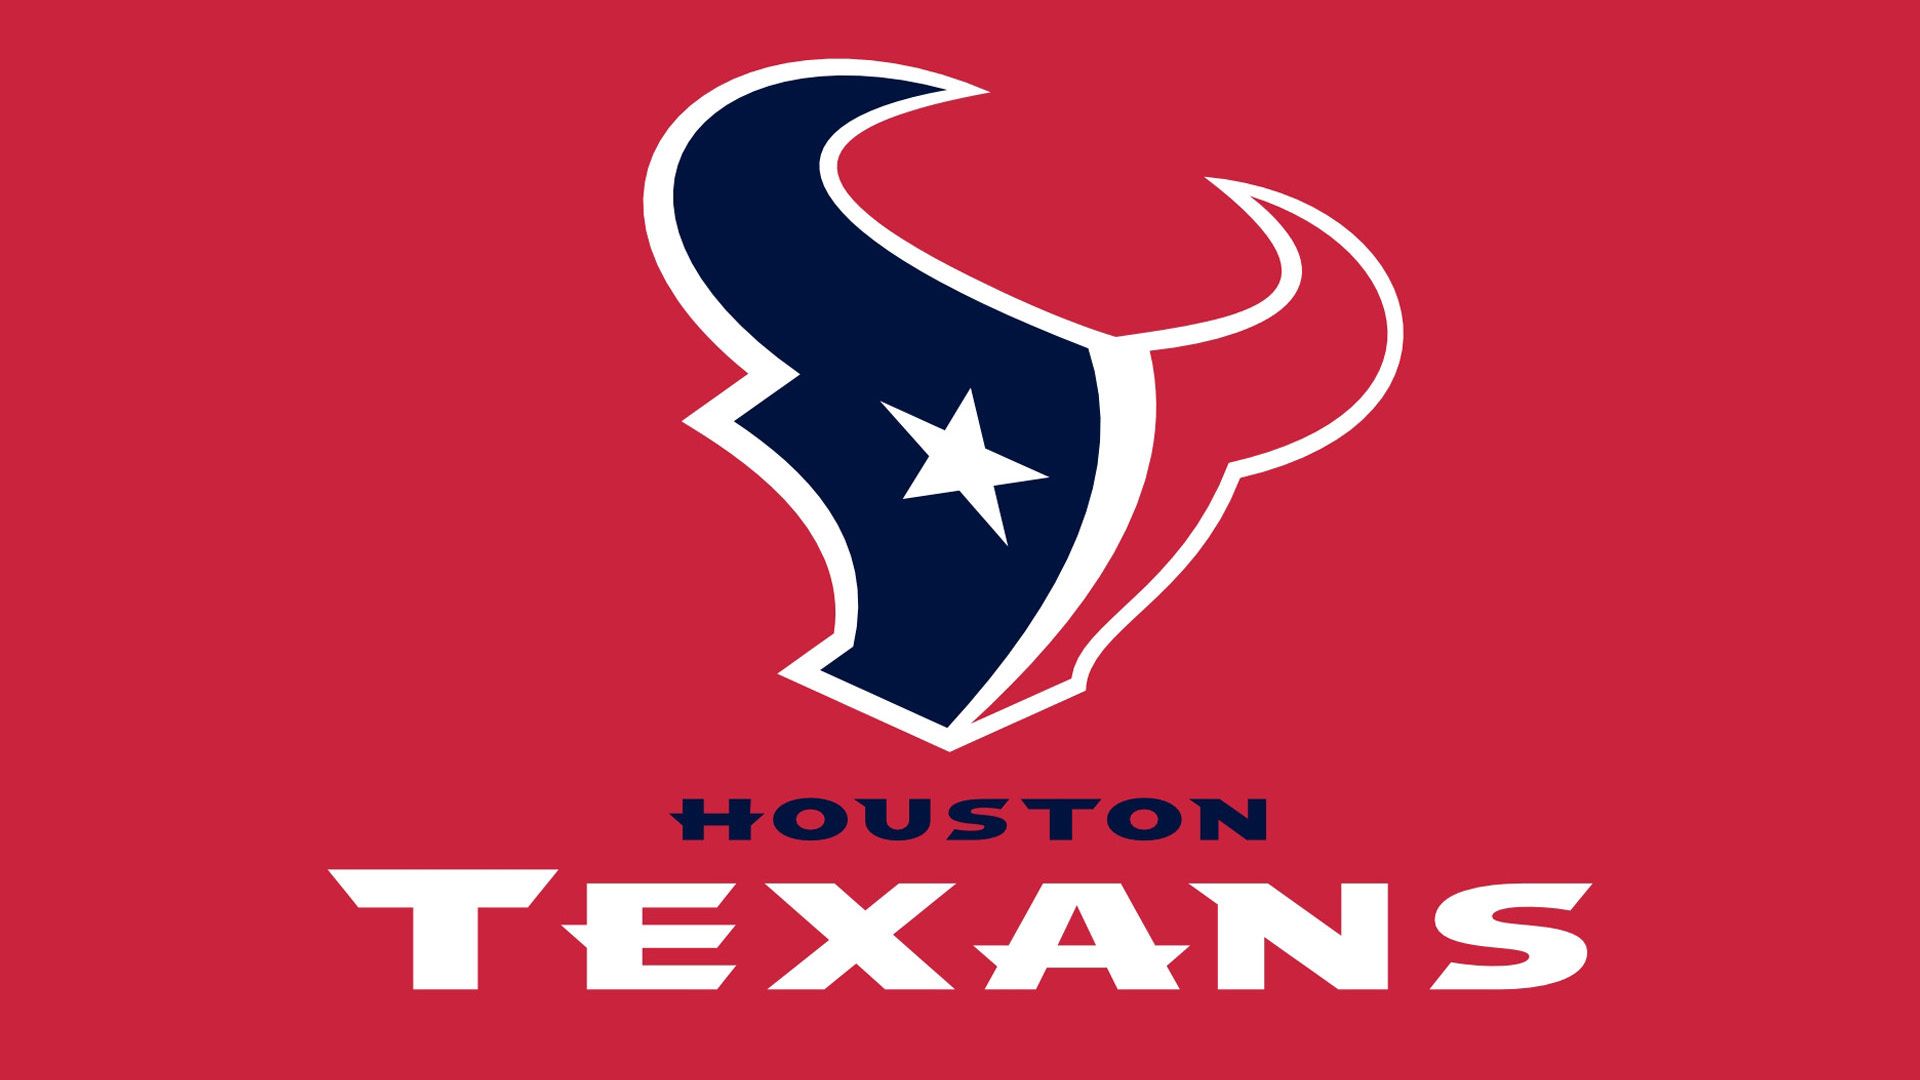 Houston Texans 1080p background